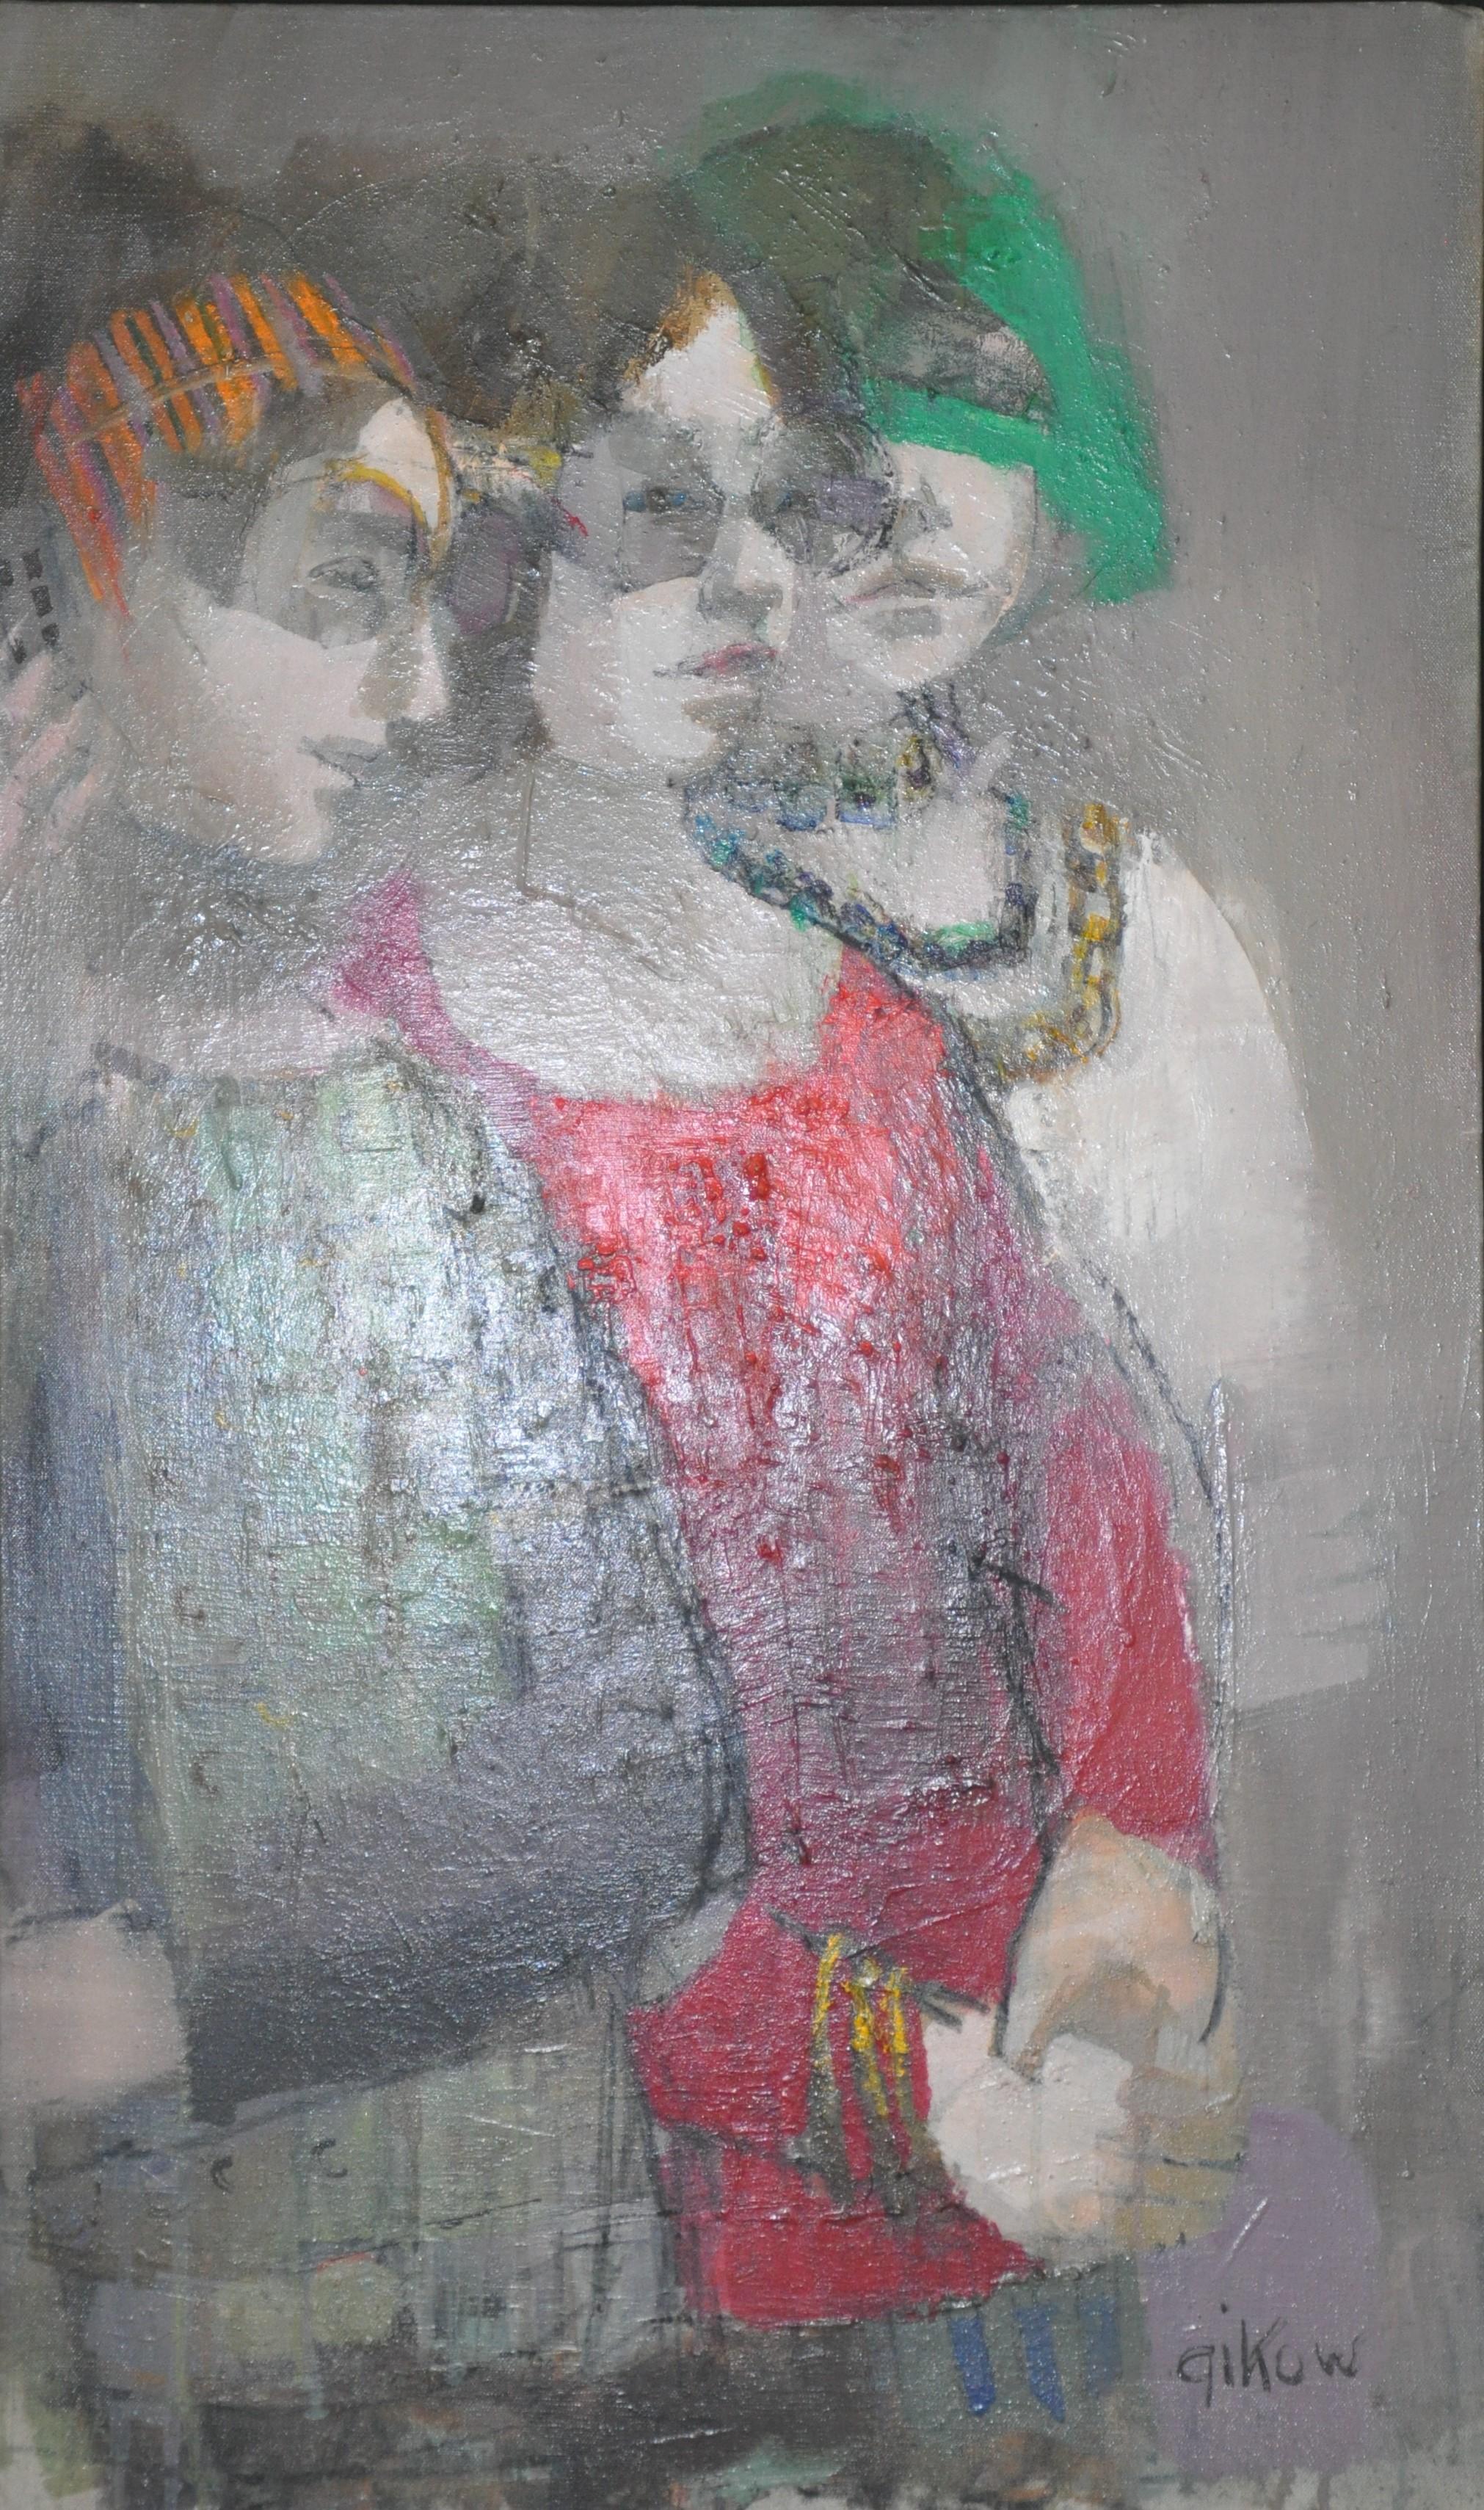 Ruth Gikow Portrait Painting - Three 60s Girls